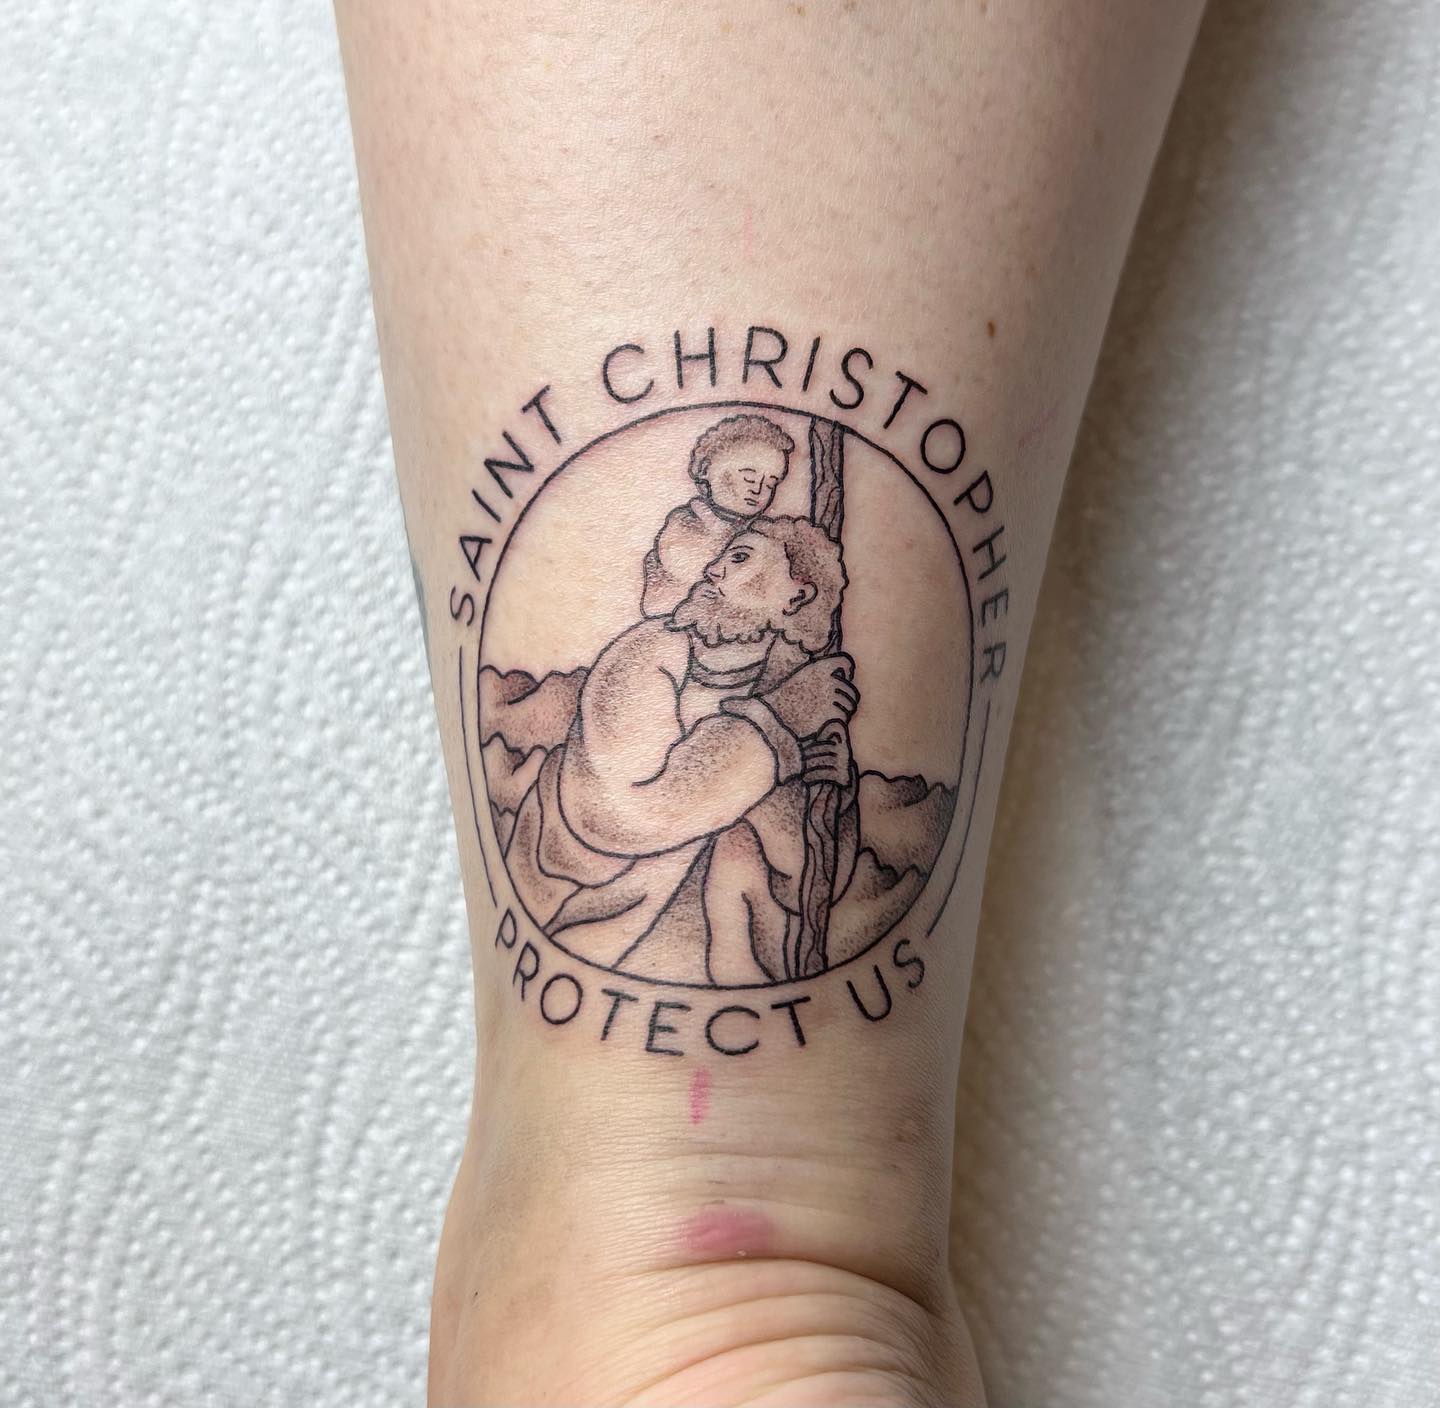 DANKE @nanyihrs 
.
#tattoo #tattooideas #tattooinspiration #saintchristopher #bl